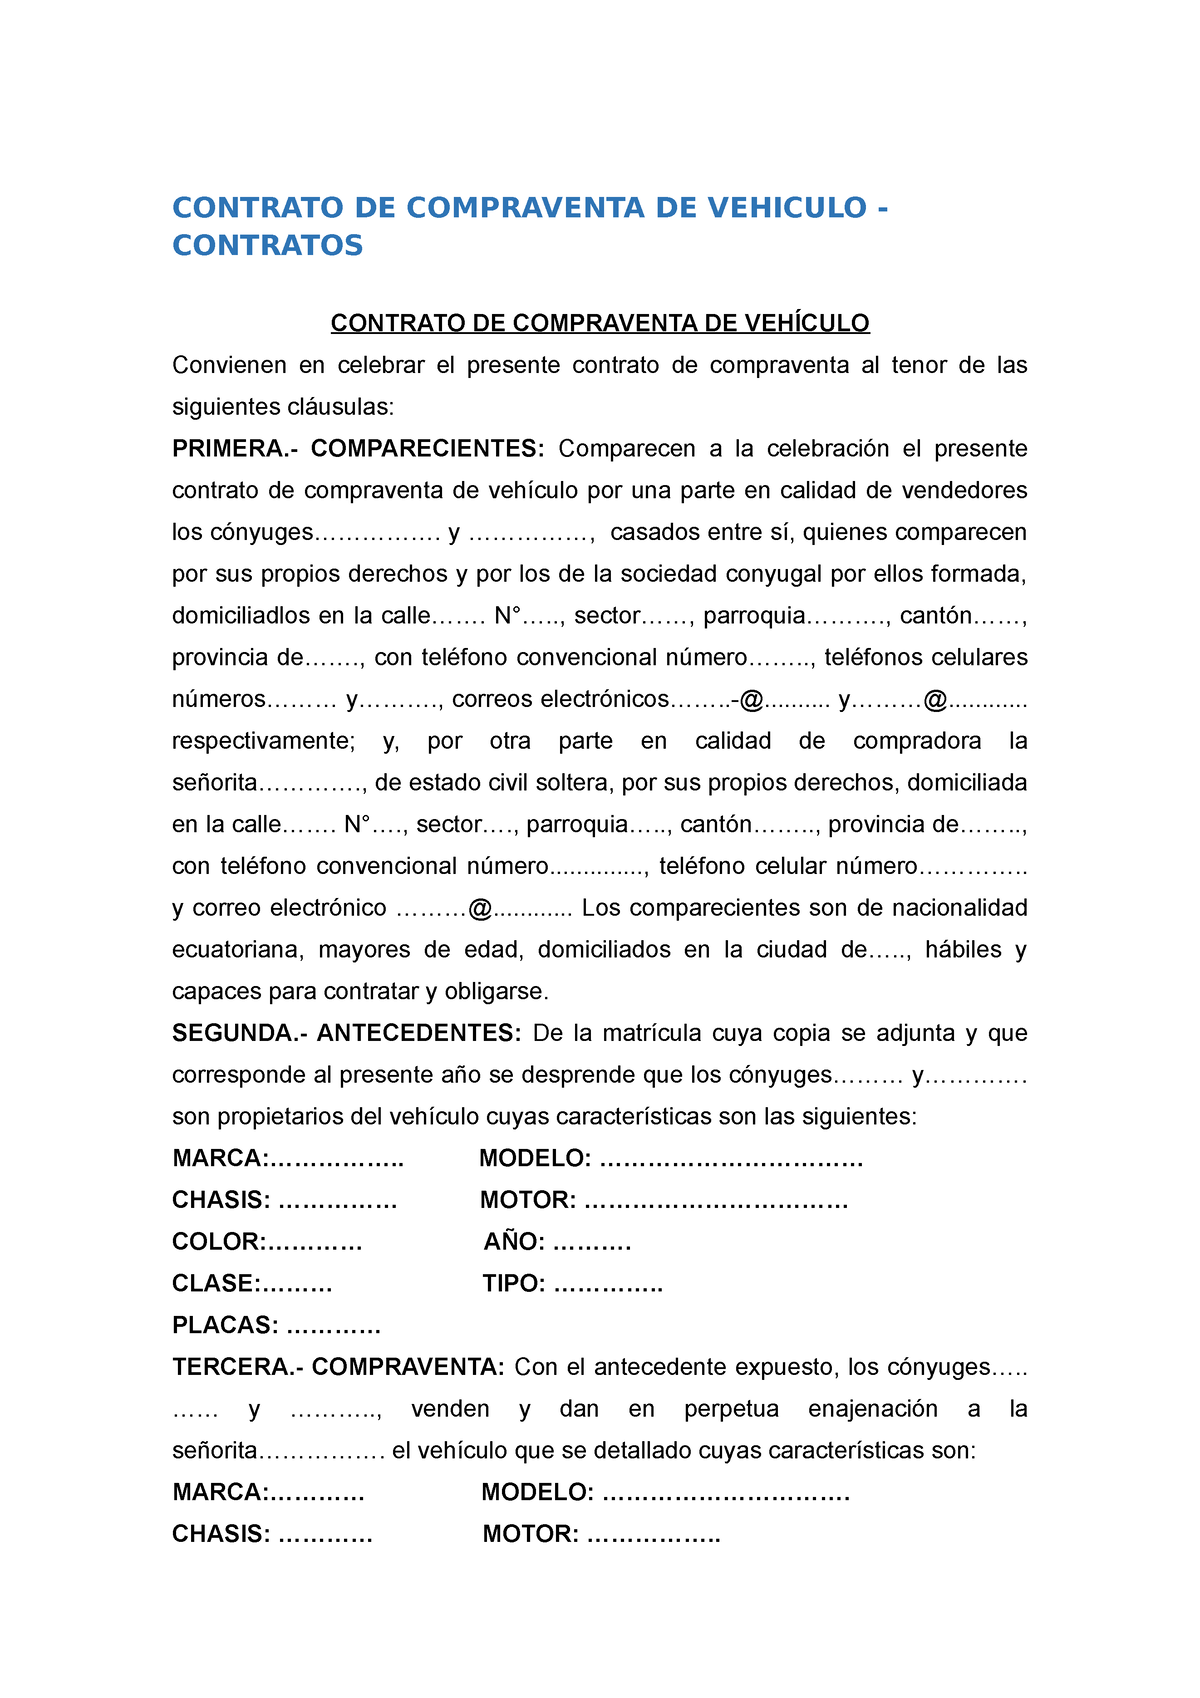 Contratode Compraventade Vehiculo Contrato De Compraventa De Vehiculo Contratos Contrato 6967